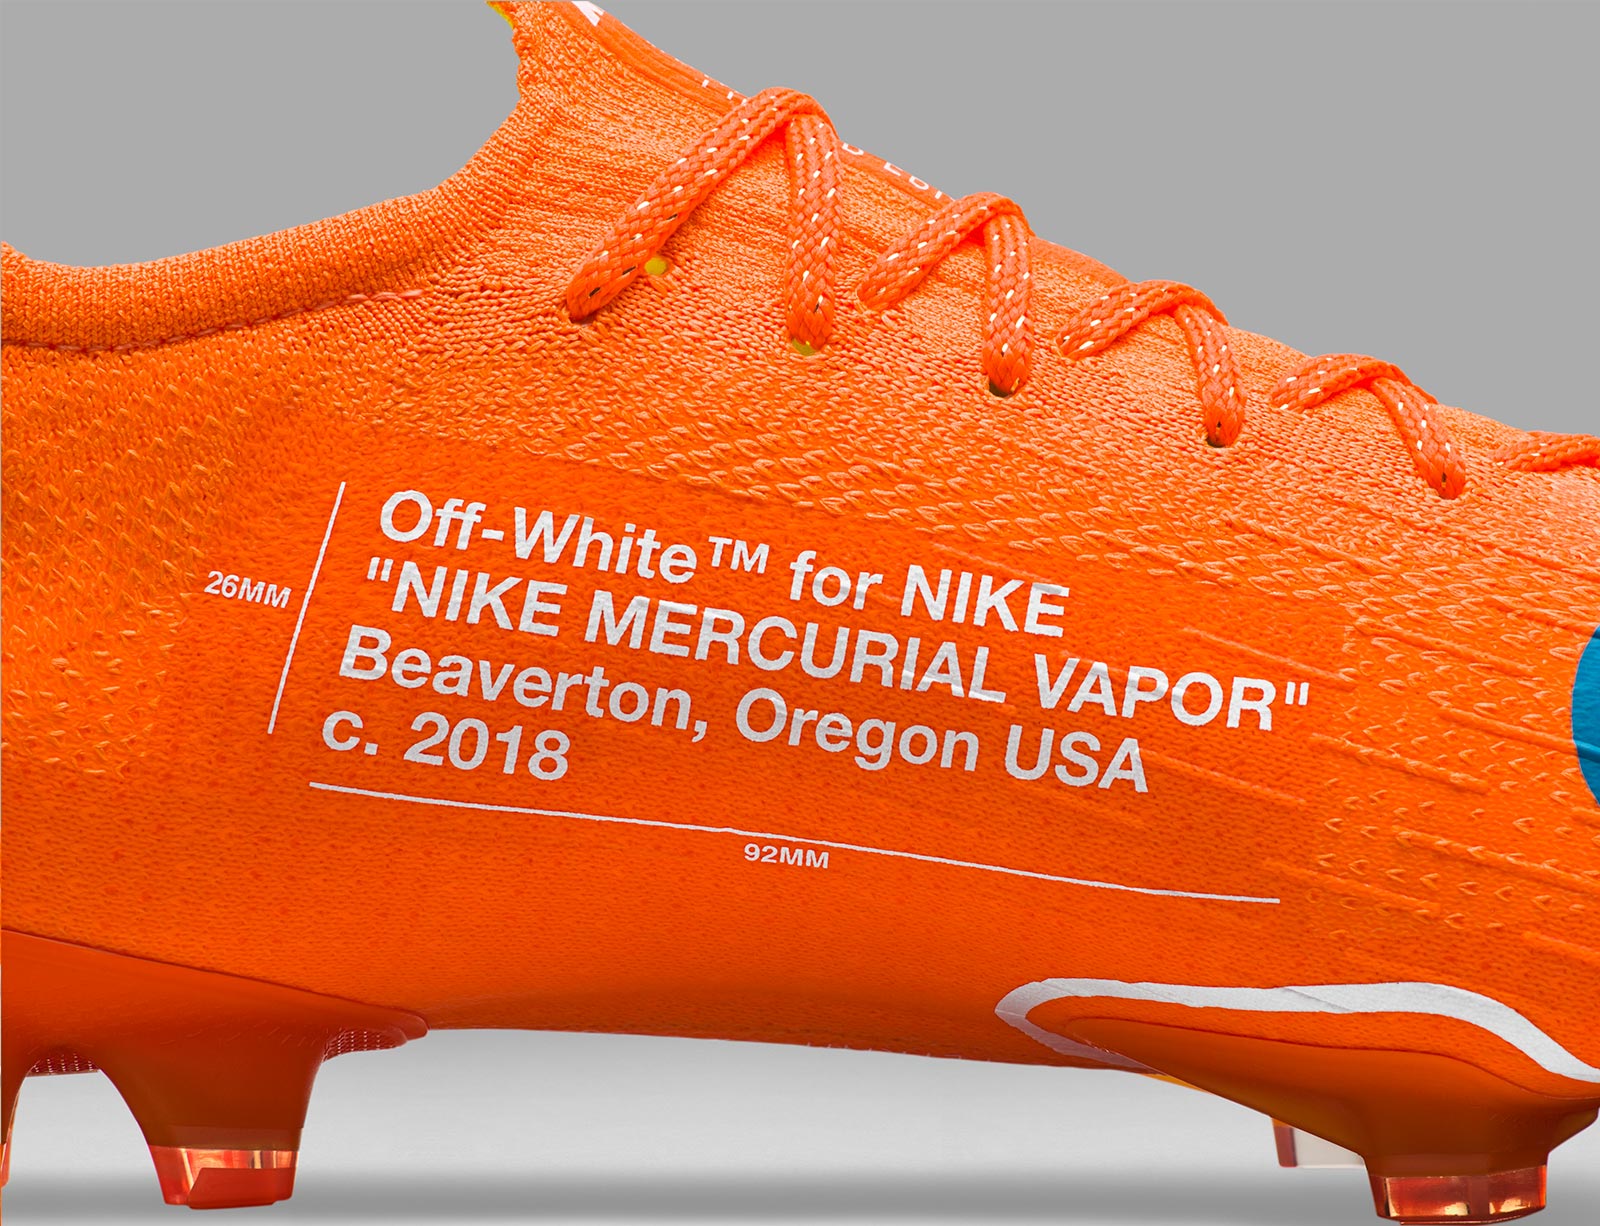 Release Date: Off-White x Nike Mercurial Vapor 360 •